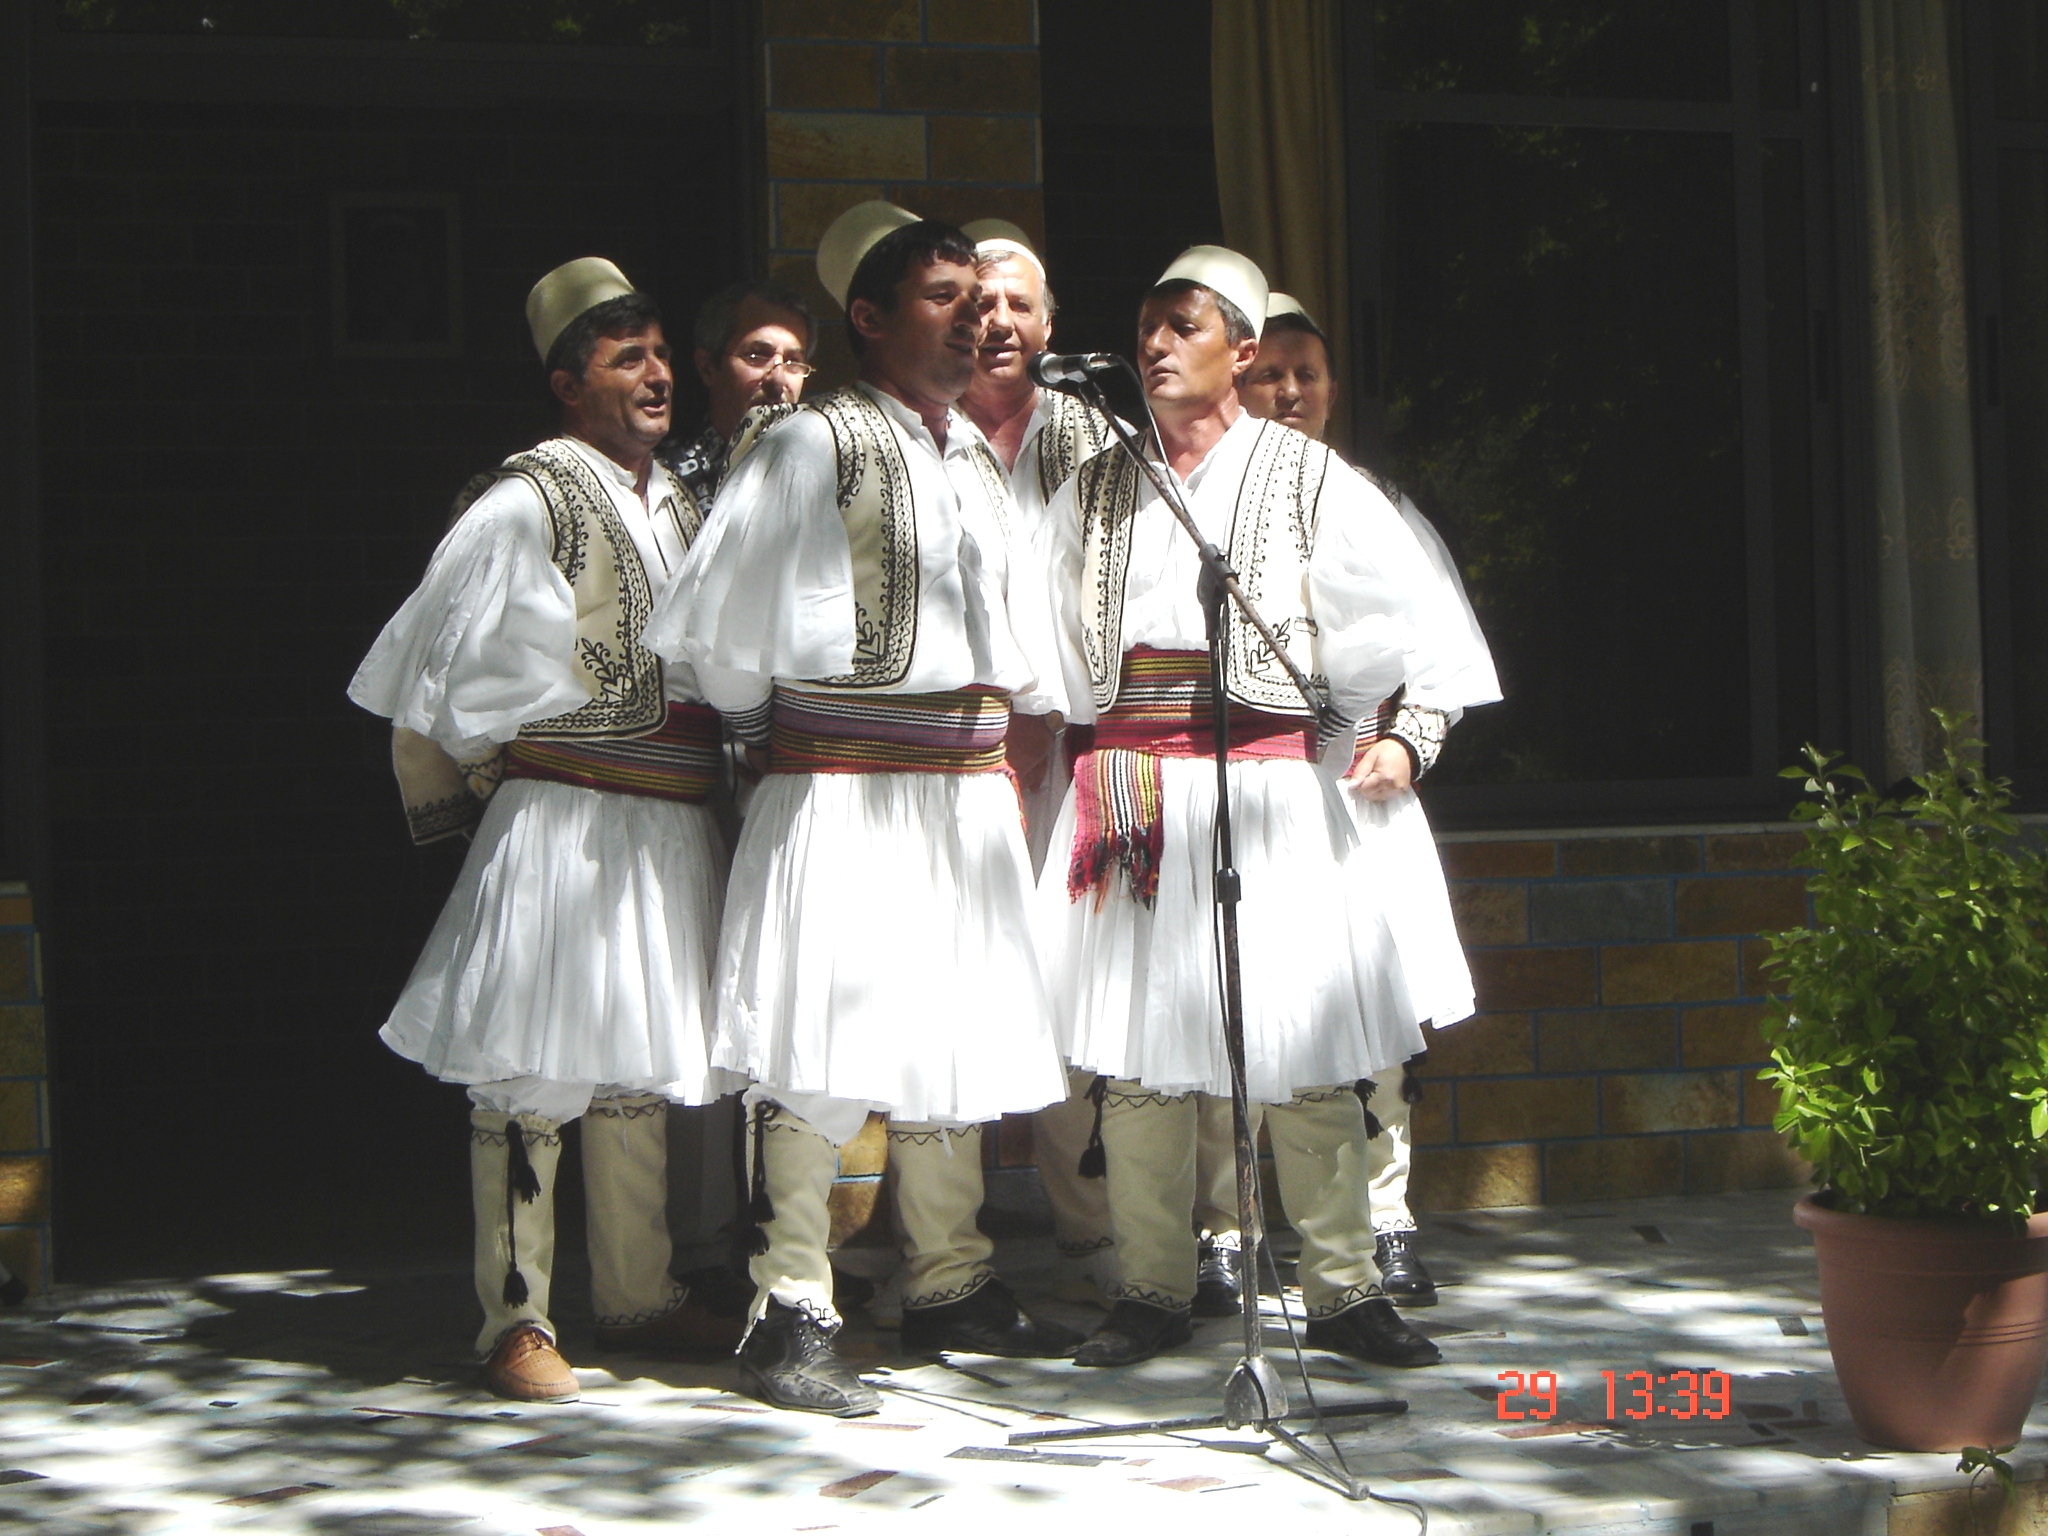 A traditional male folk group from Skrapar